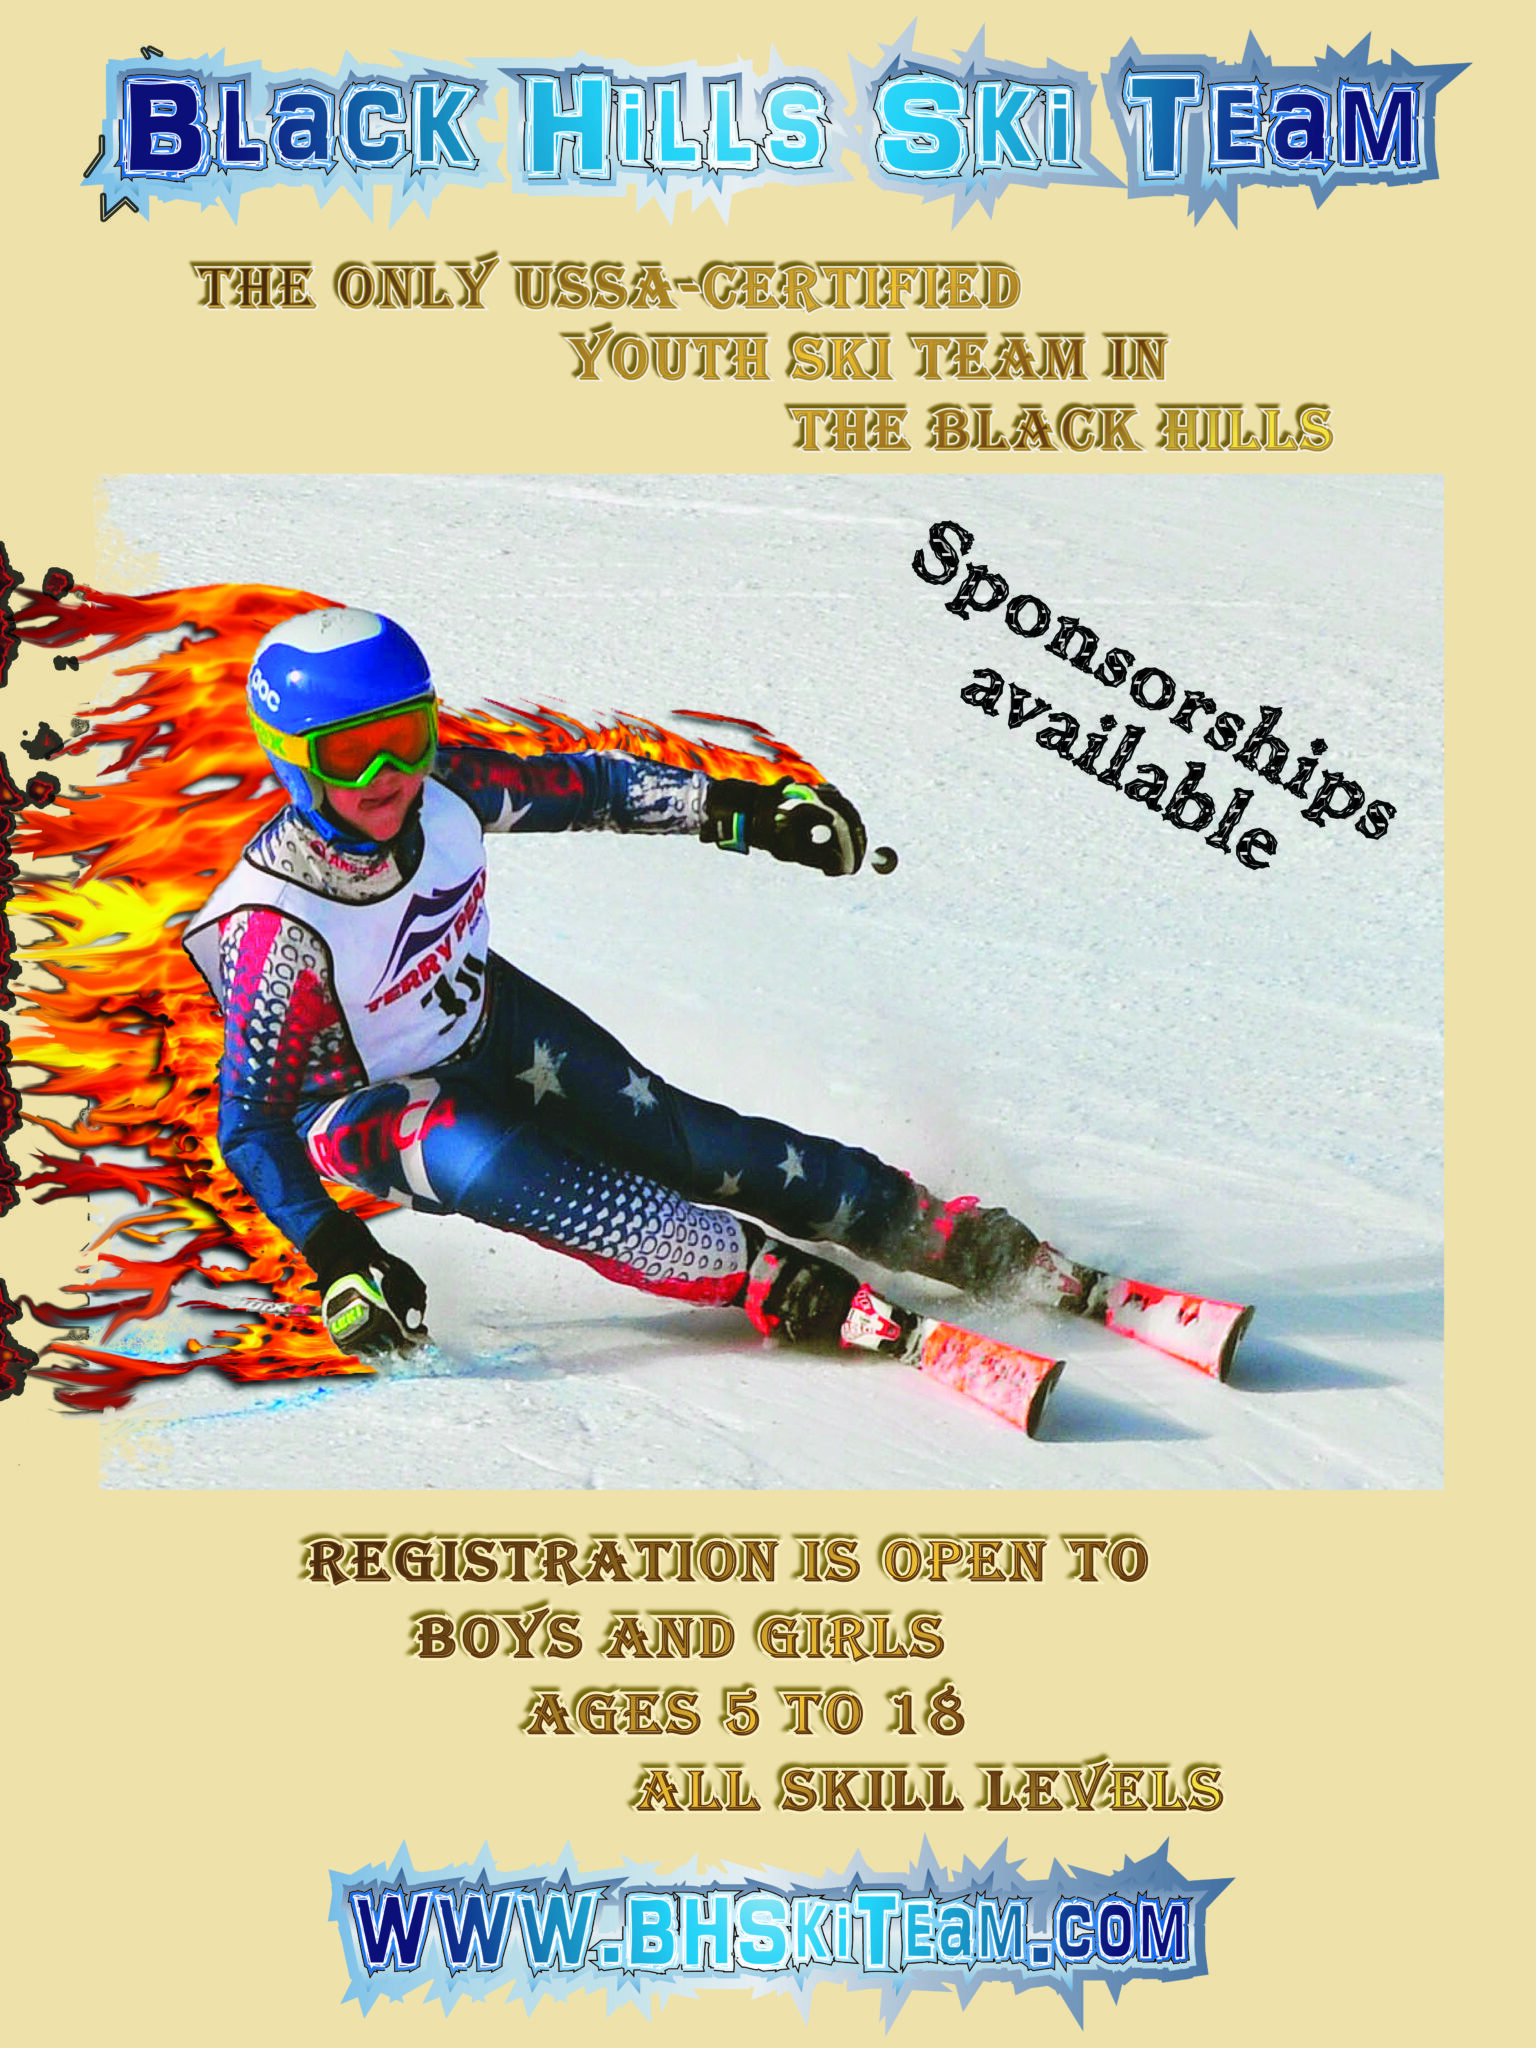 Youth ski team registration advertisement flyer